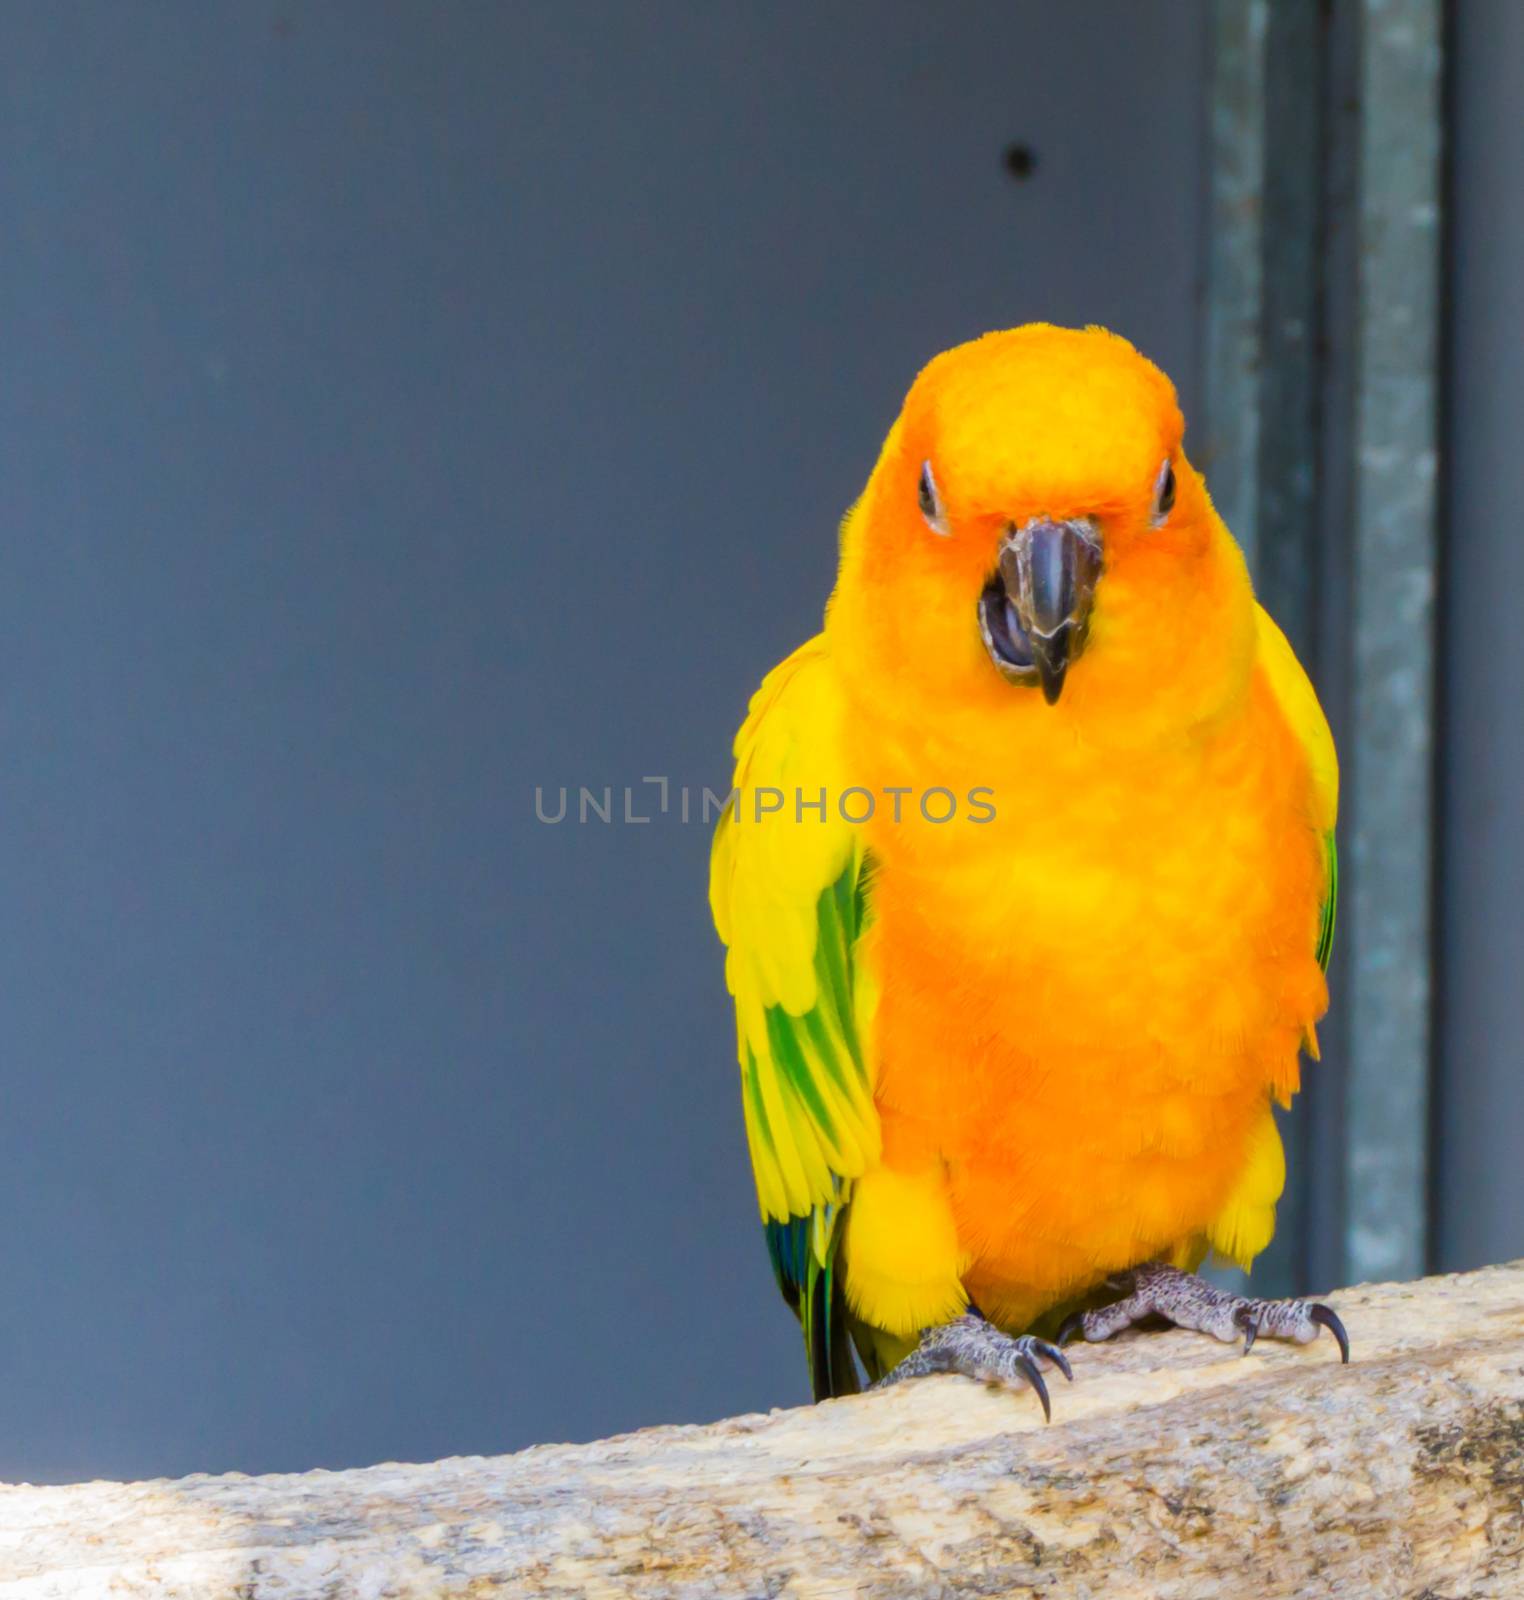 jandaya parakeet sitting on a branch in closeup opening his beak sideways, a tropical colorful bird from brazil by charlottebleijenberg